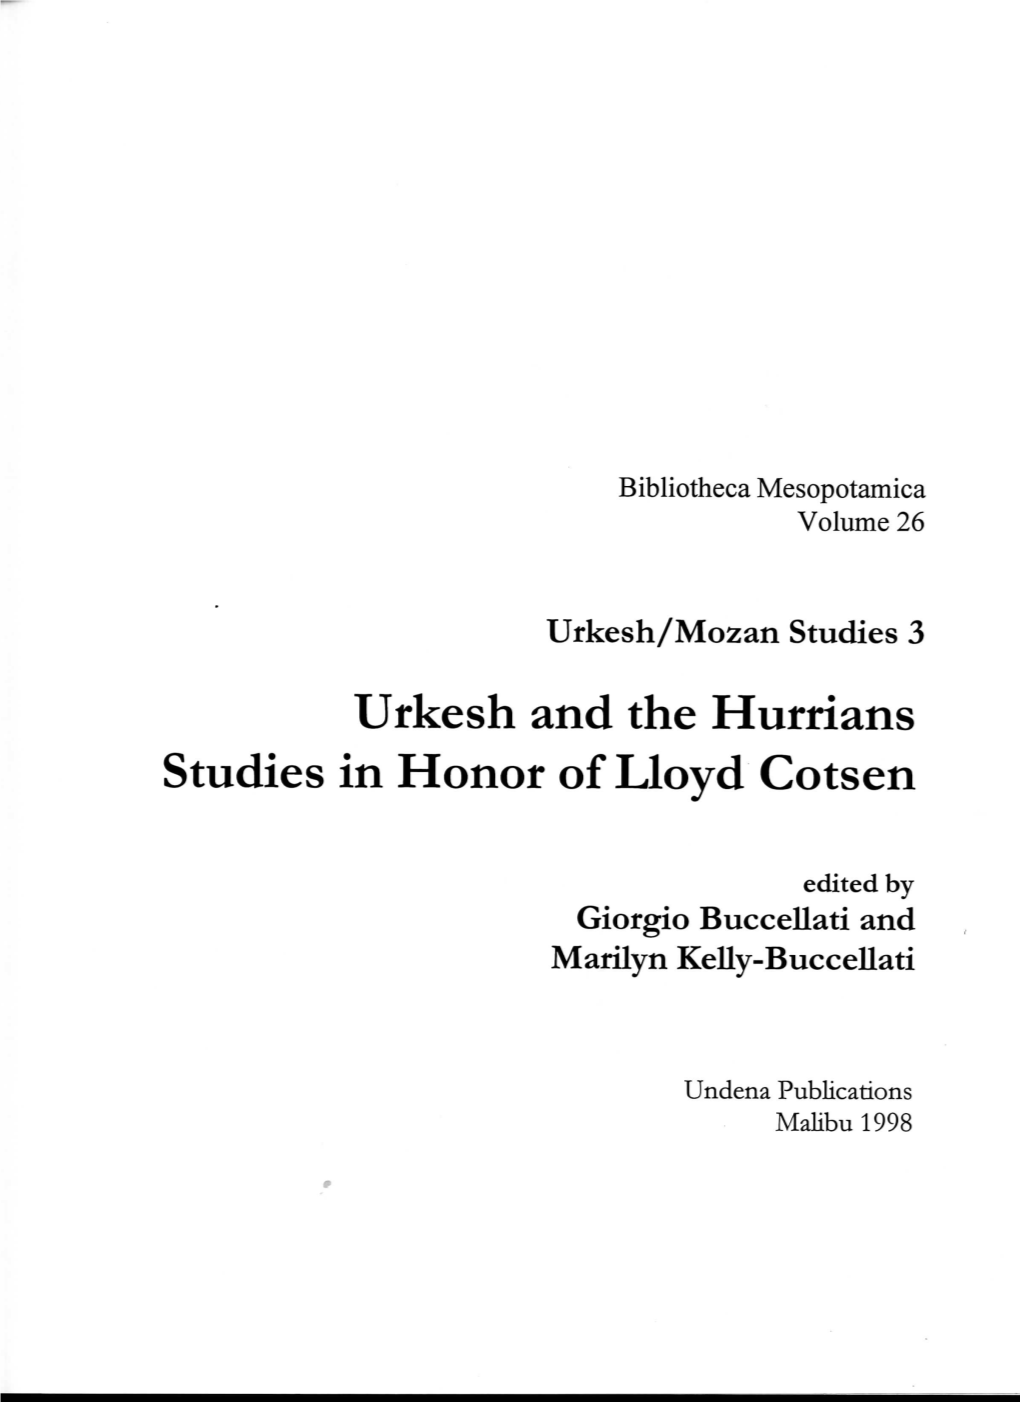 Urkesh and the Hurrians Studies in Honor of Lloyd Cotsen